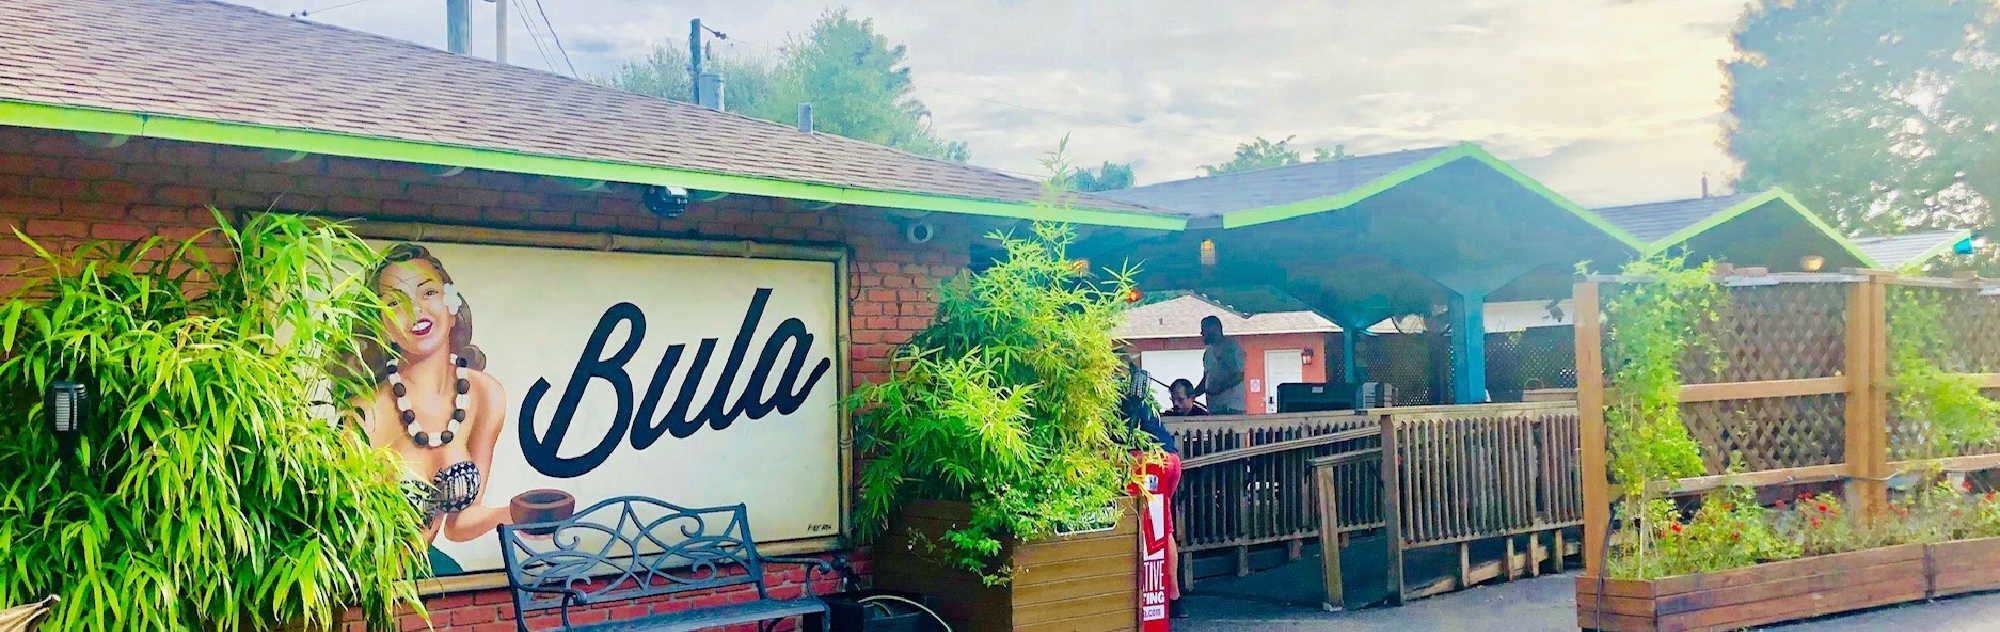 image of bula kafe in petesburg florida